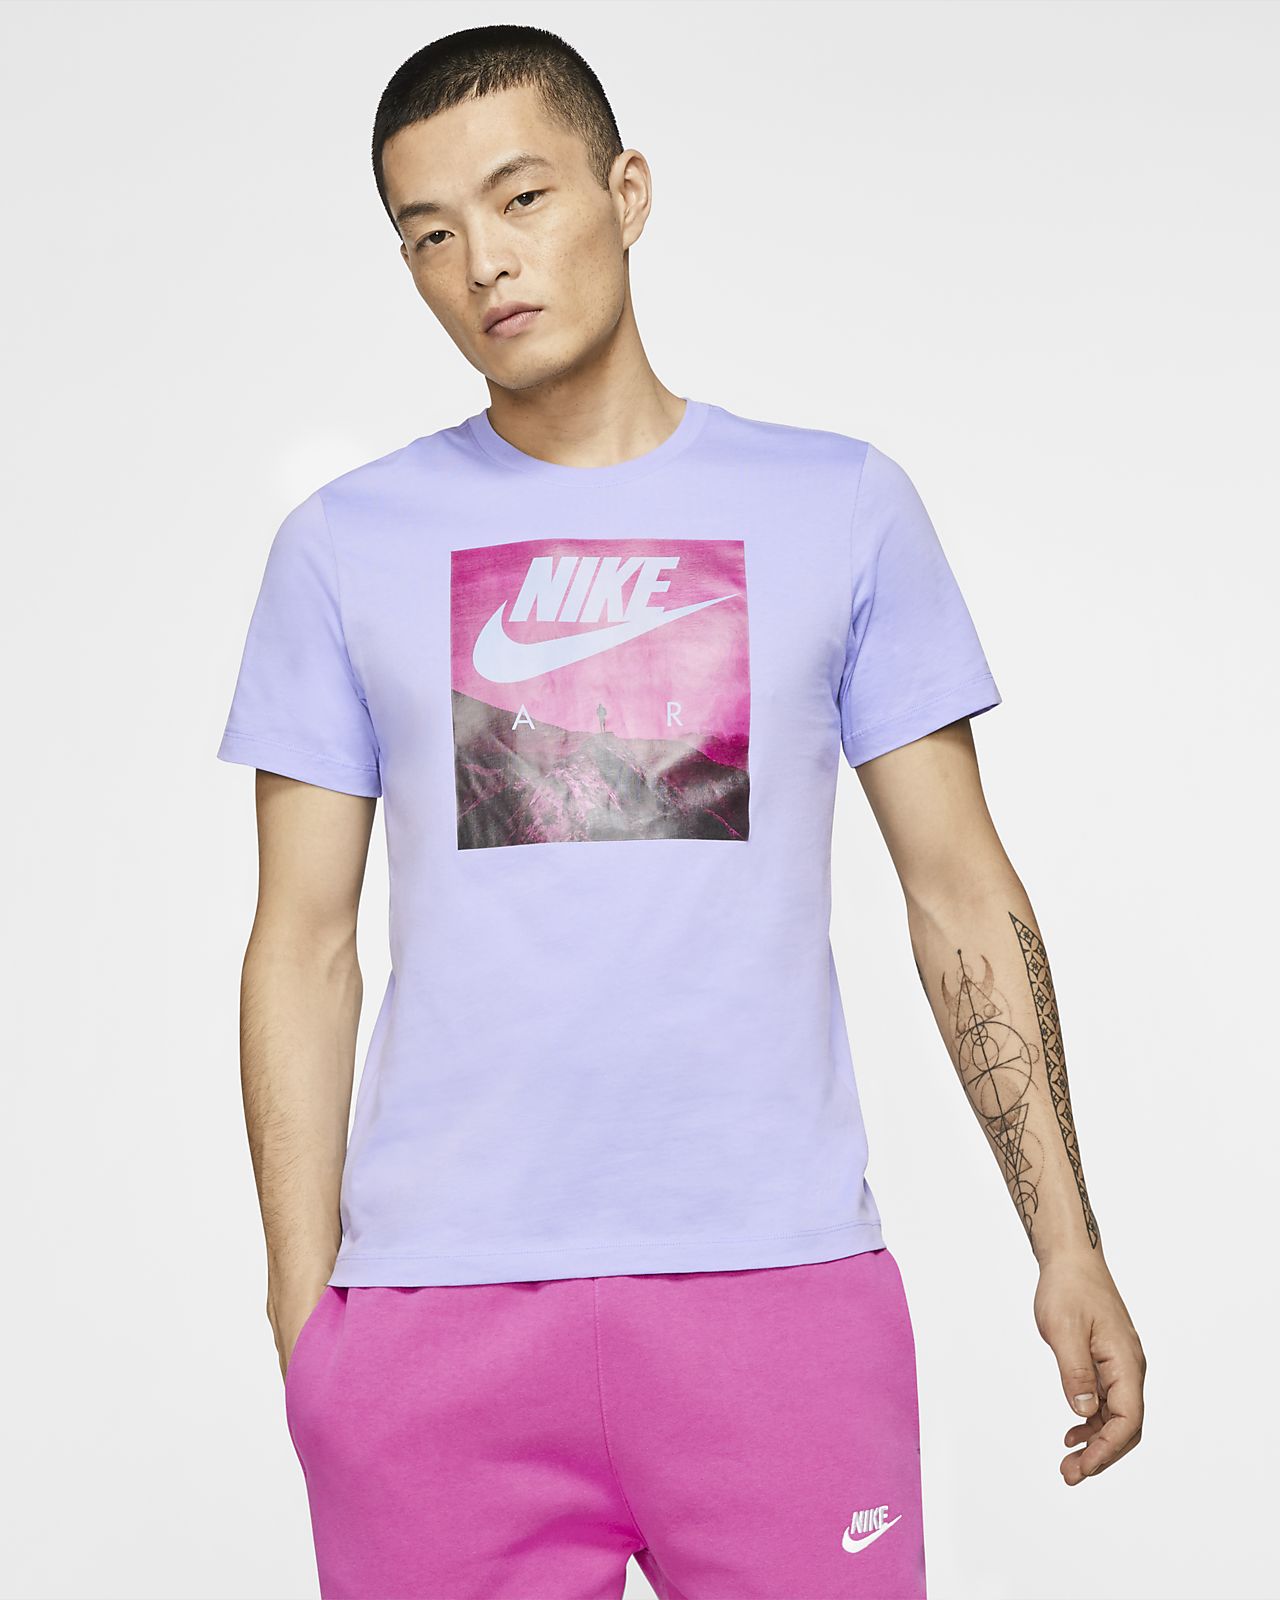 nike pink and purple shirt